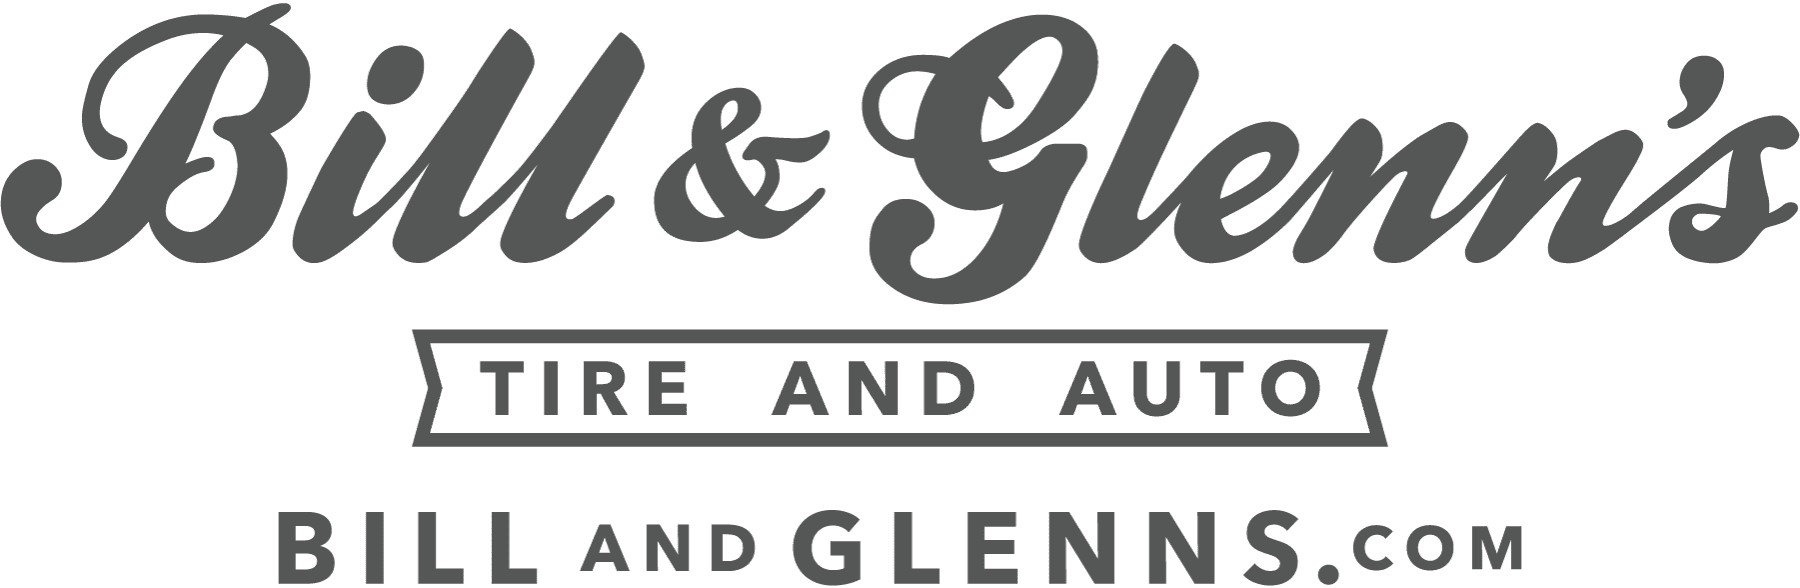 Alternative horizontal logo for Bill & Glenn's Tire and Auto